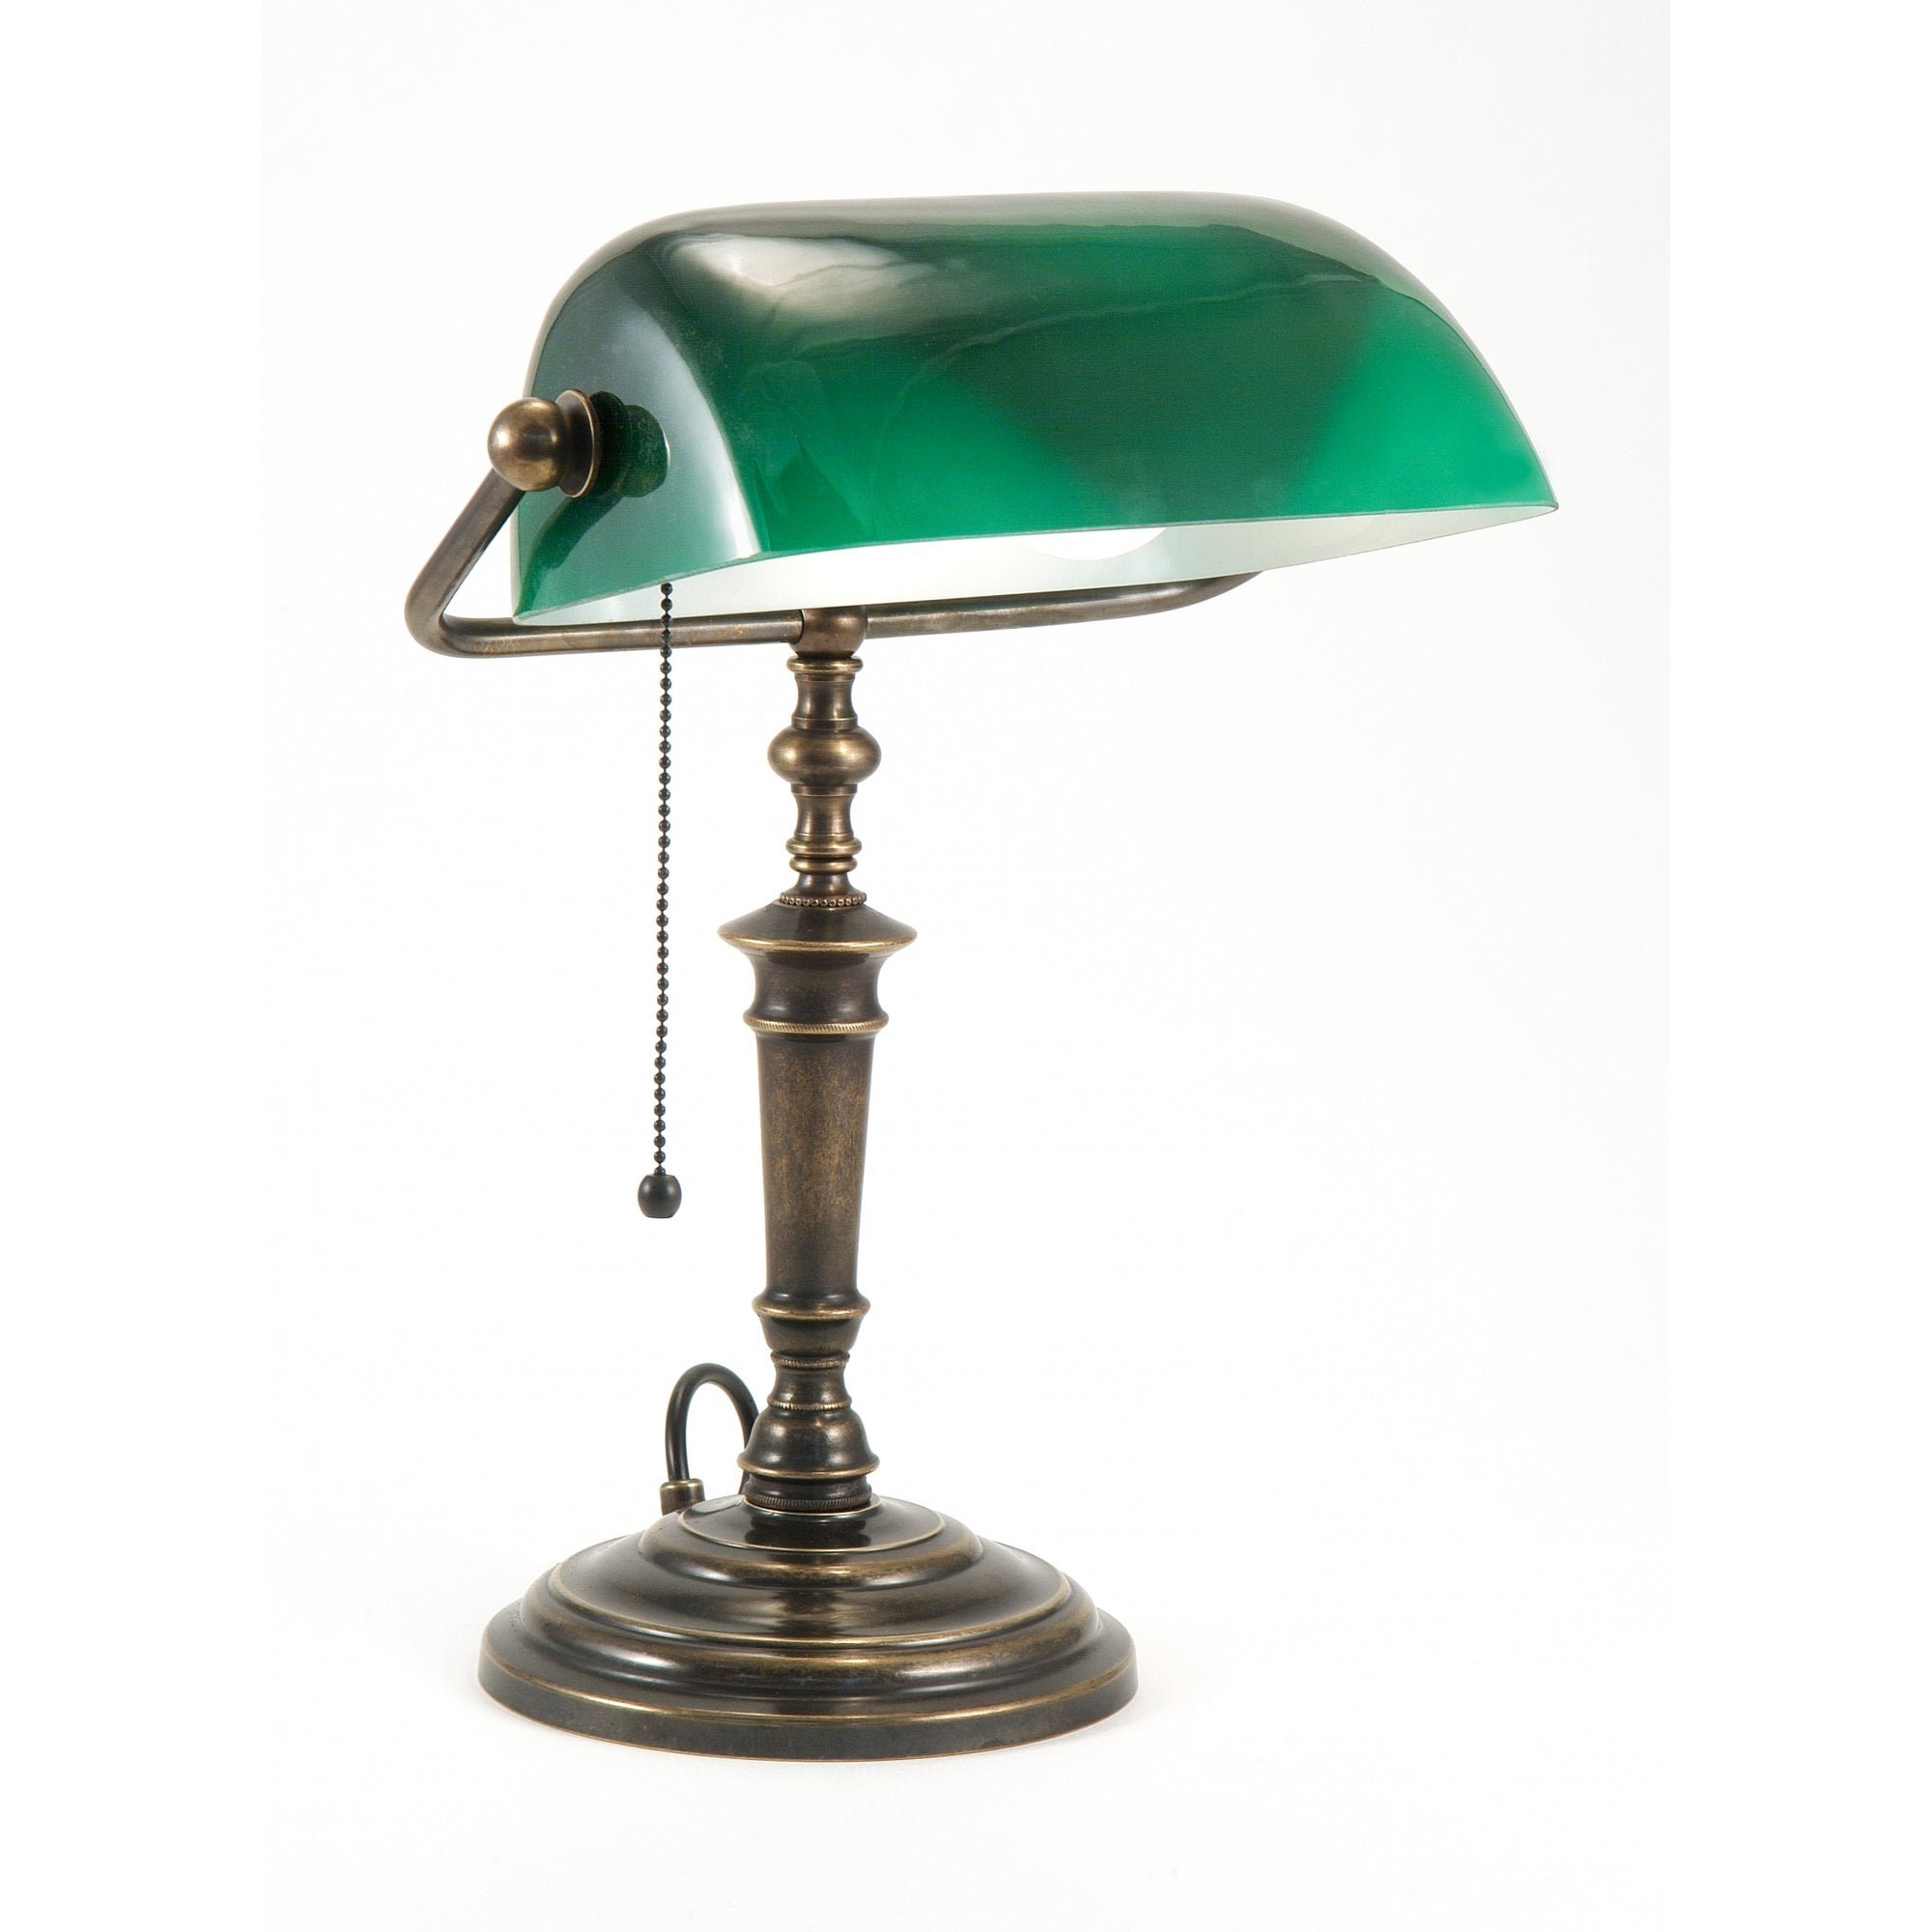 Настольные лампы с зеленым абажуром купить. Настольная лампа Eglo Banker 90967. Bankers настольная лампа 25cm Oxide/Green. Настольная лампа Eglo Banker зеленая. Bankers Lamp лампа настольный светильник.